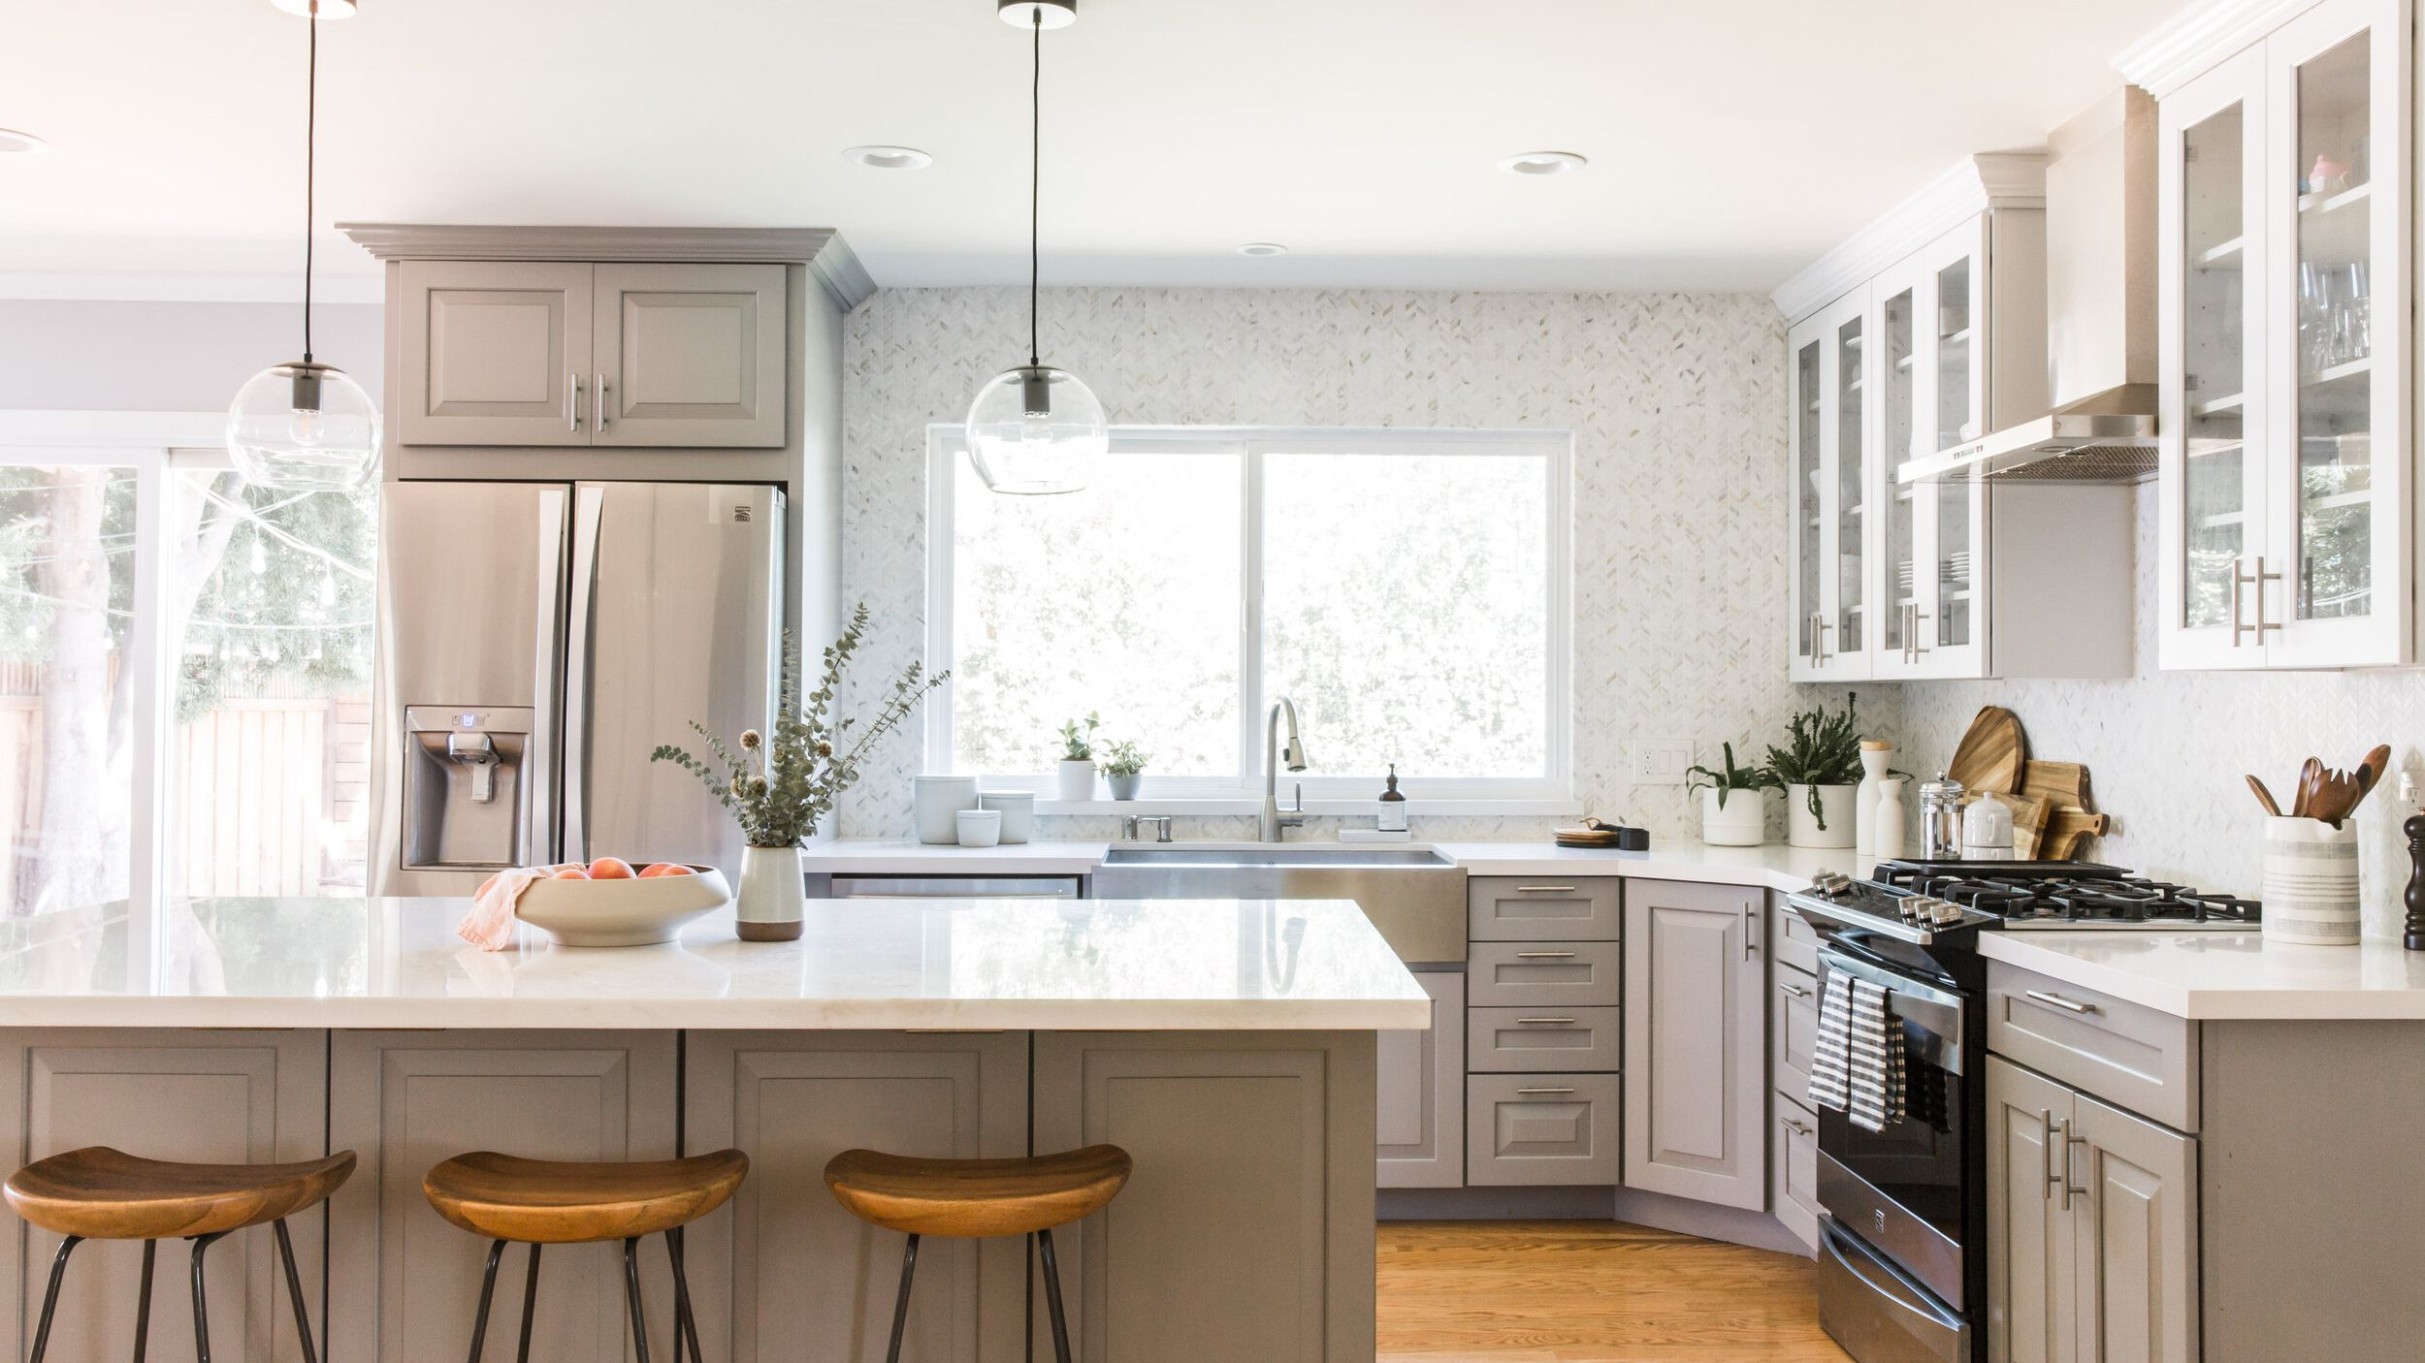 5 Gray Kitchen Cabinet Ideas That We Love - gray kitchen cabinets ideas